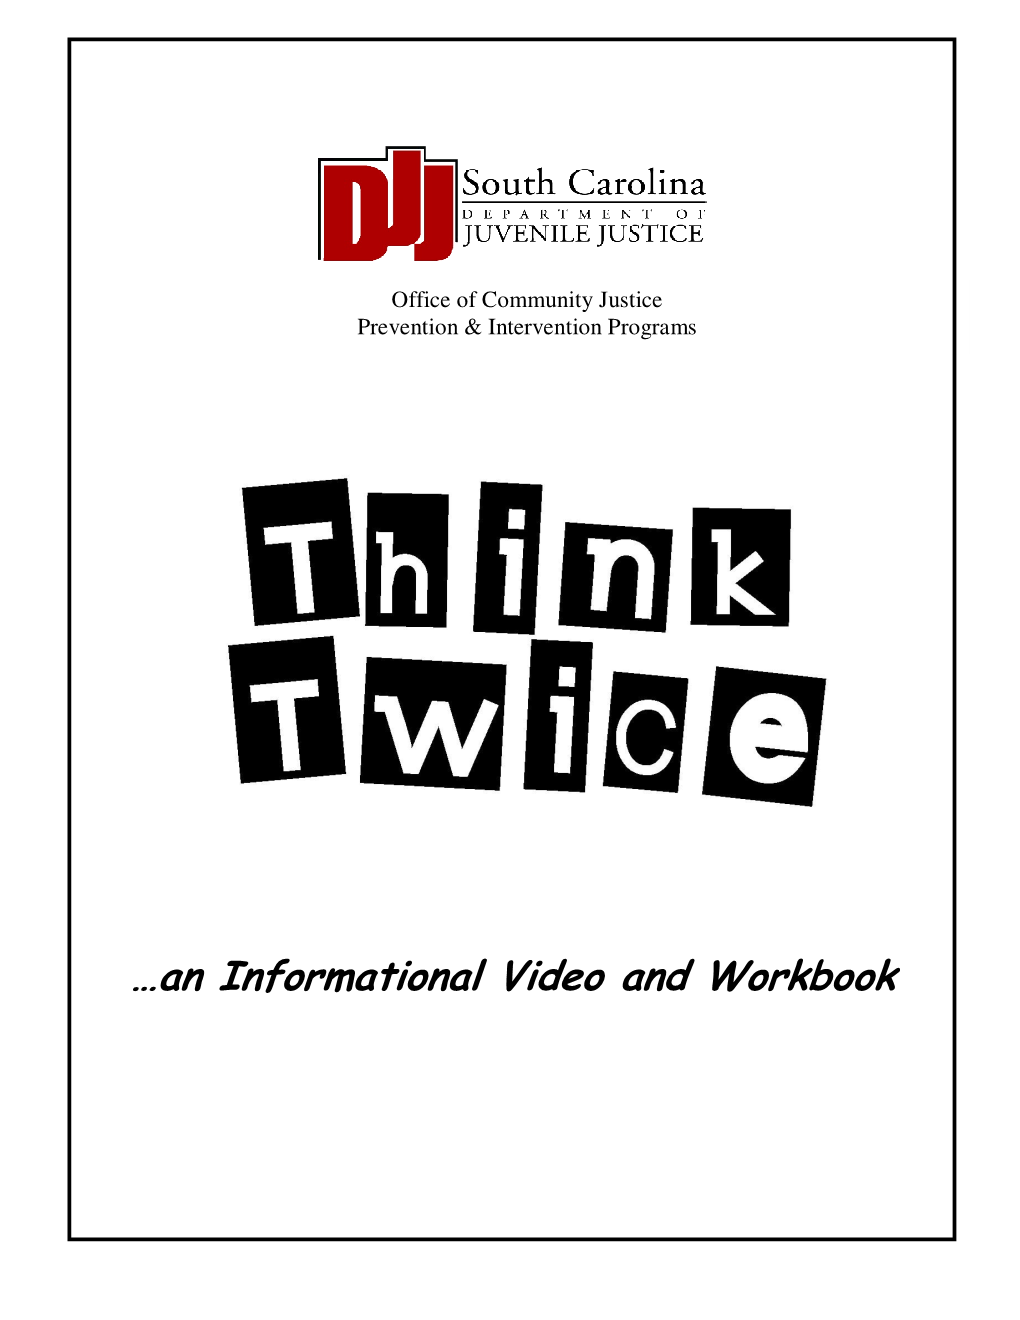 Think Twice Video Workbook